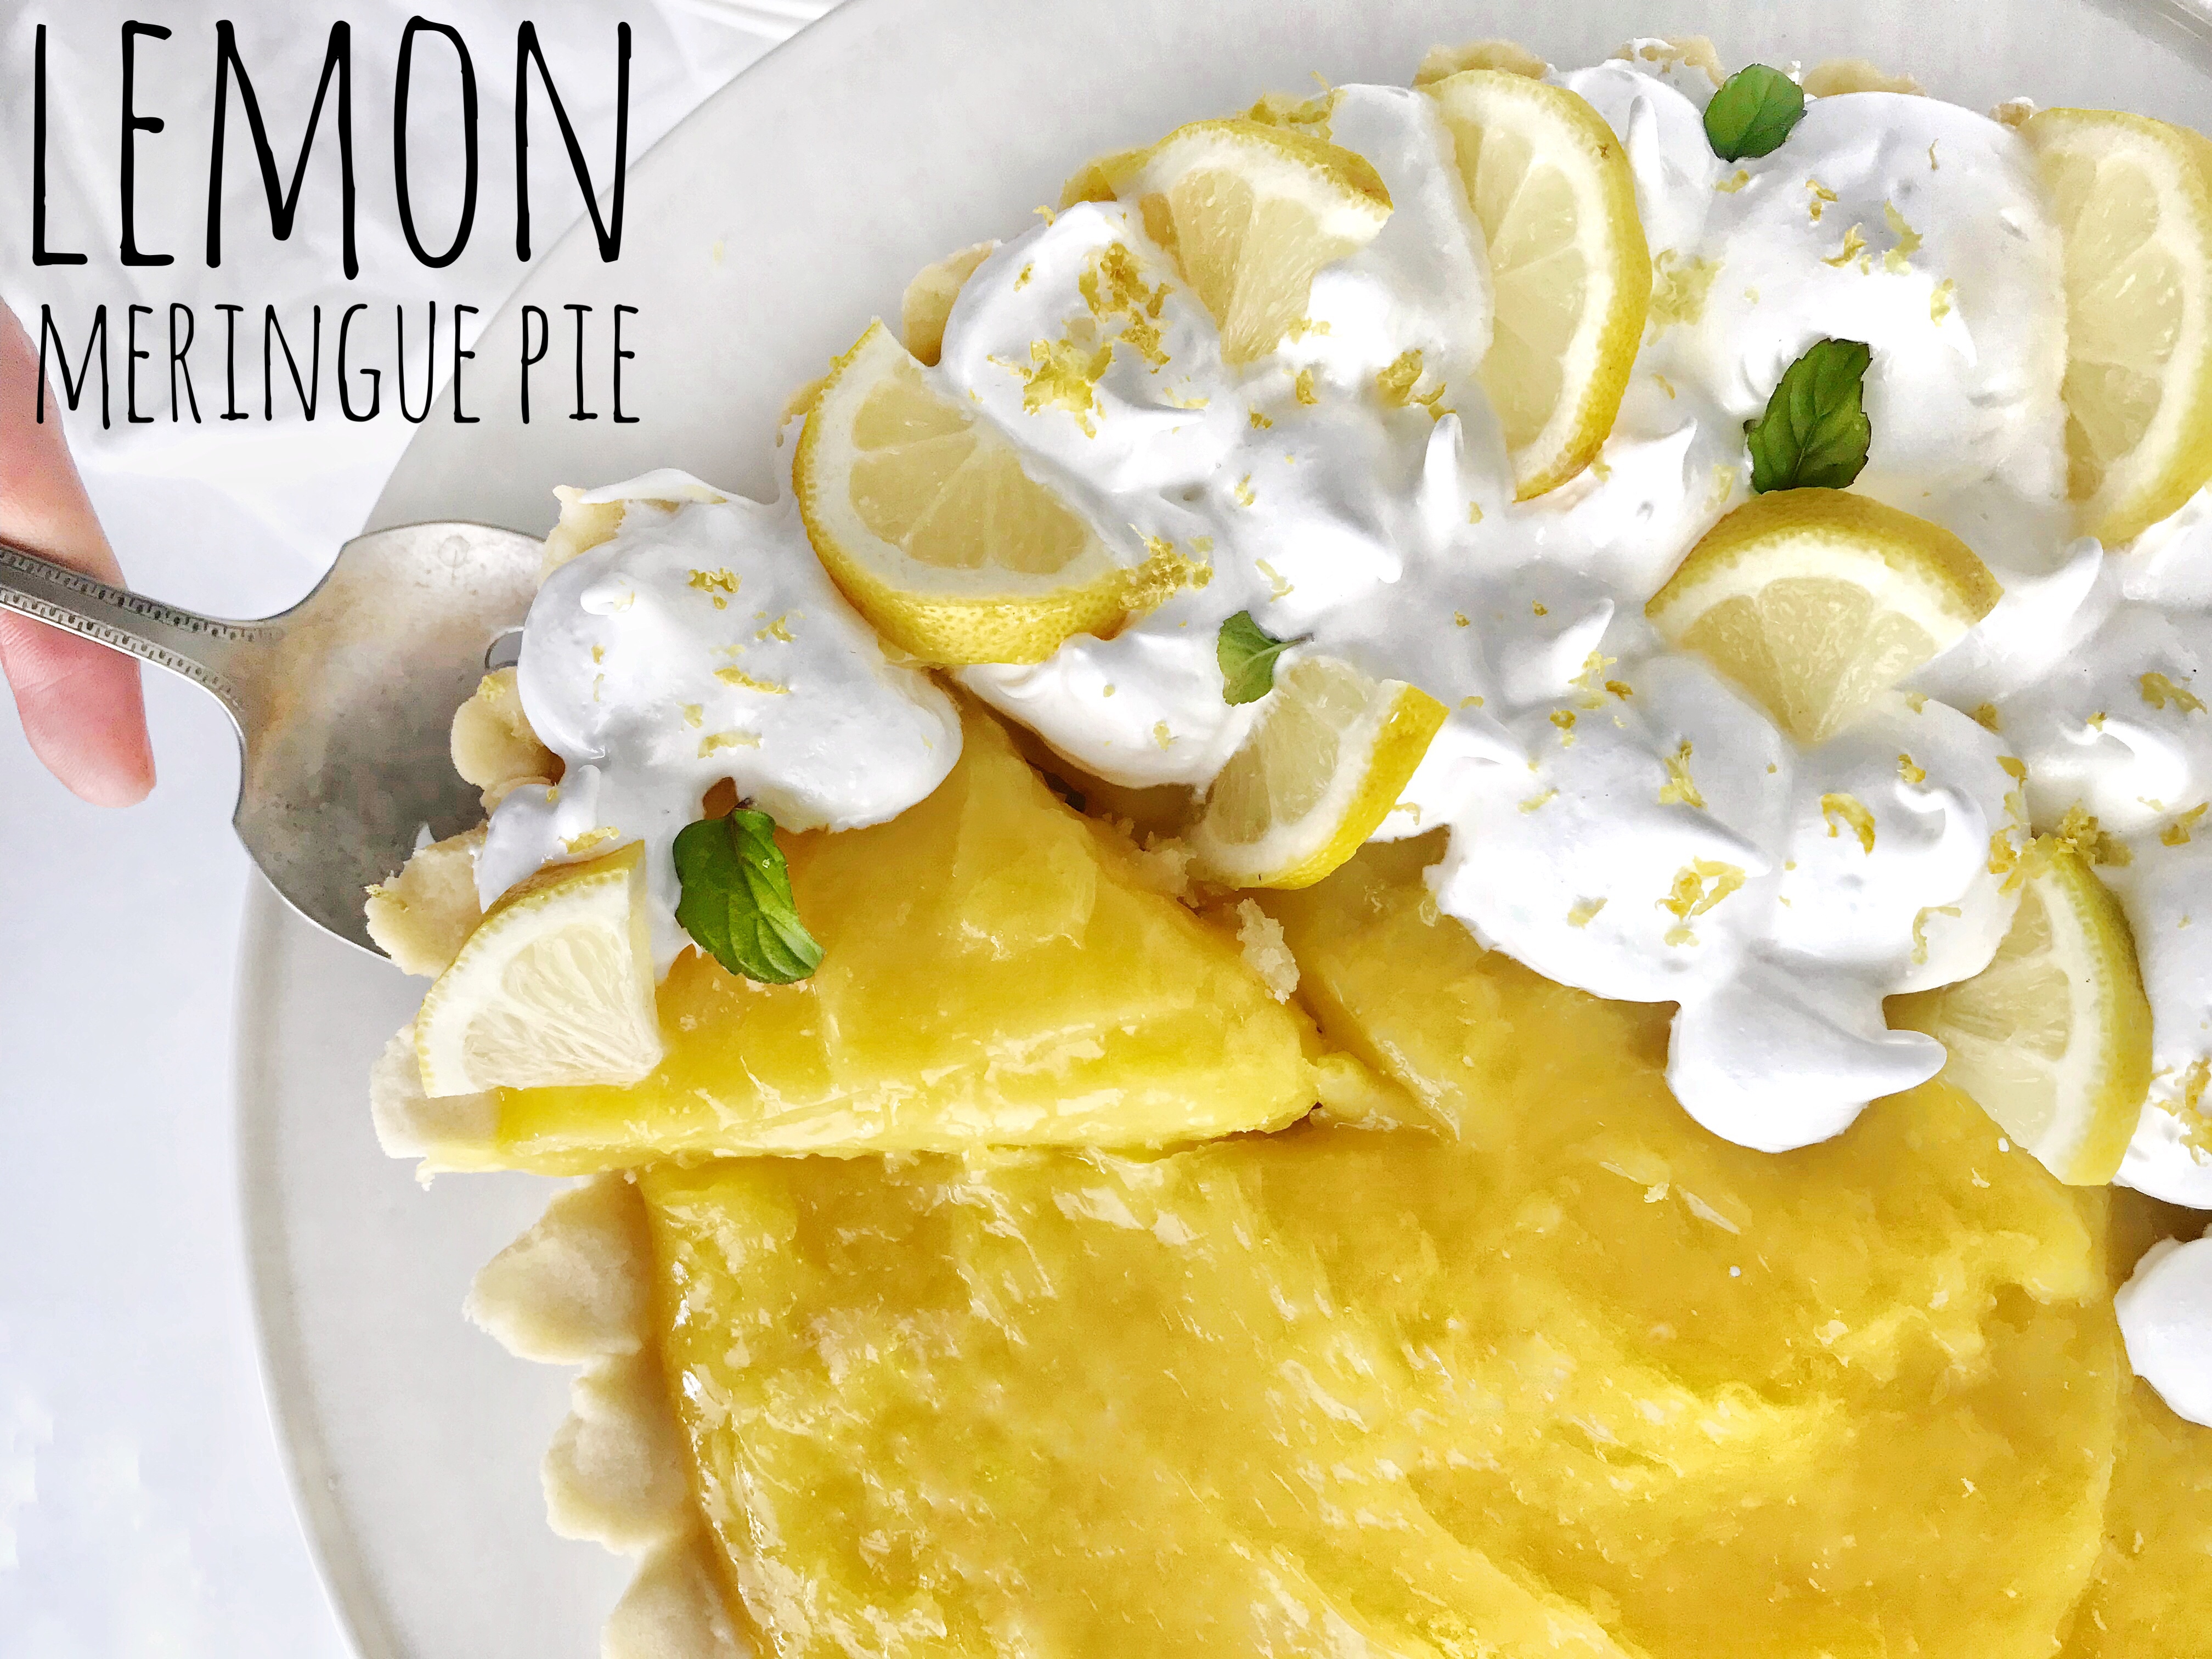 Try our lemon meringue pie recipe